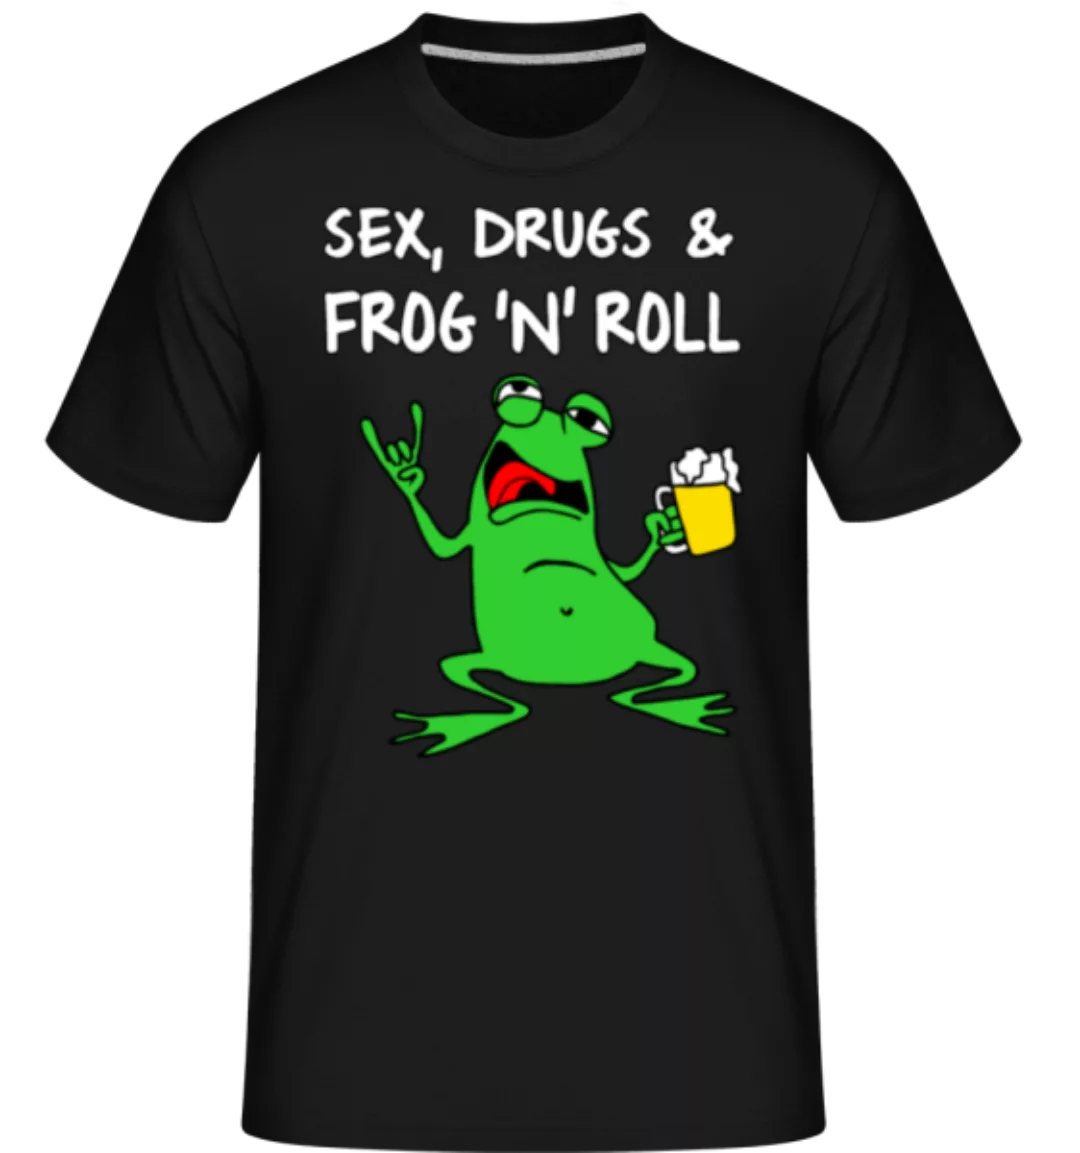 Sex Drugs & Frog'n'Roll · Shirtinator Männer T-Shirt günstig online kaufen